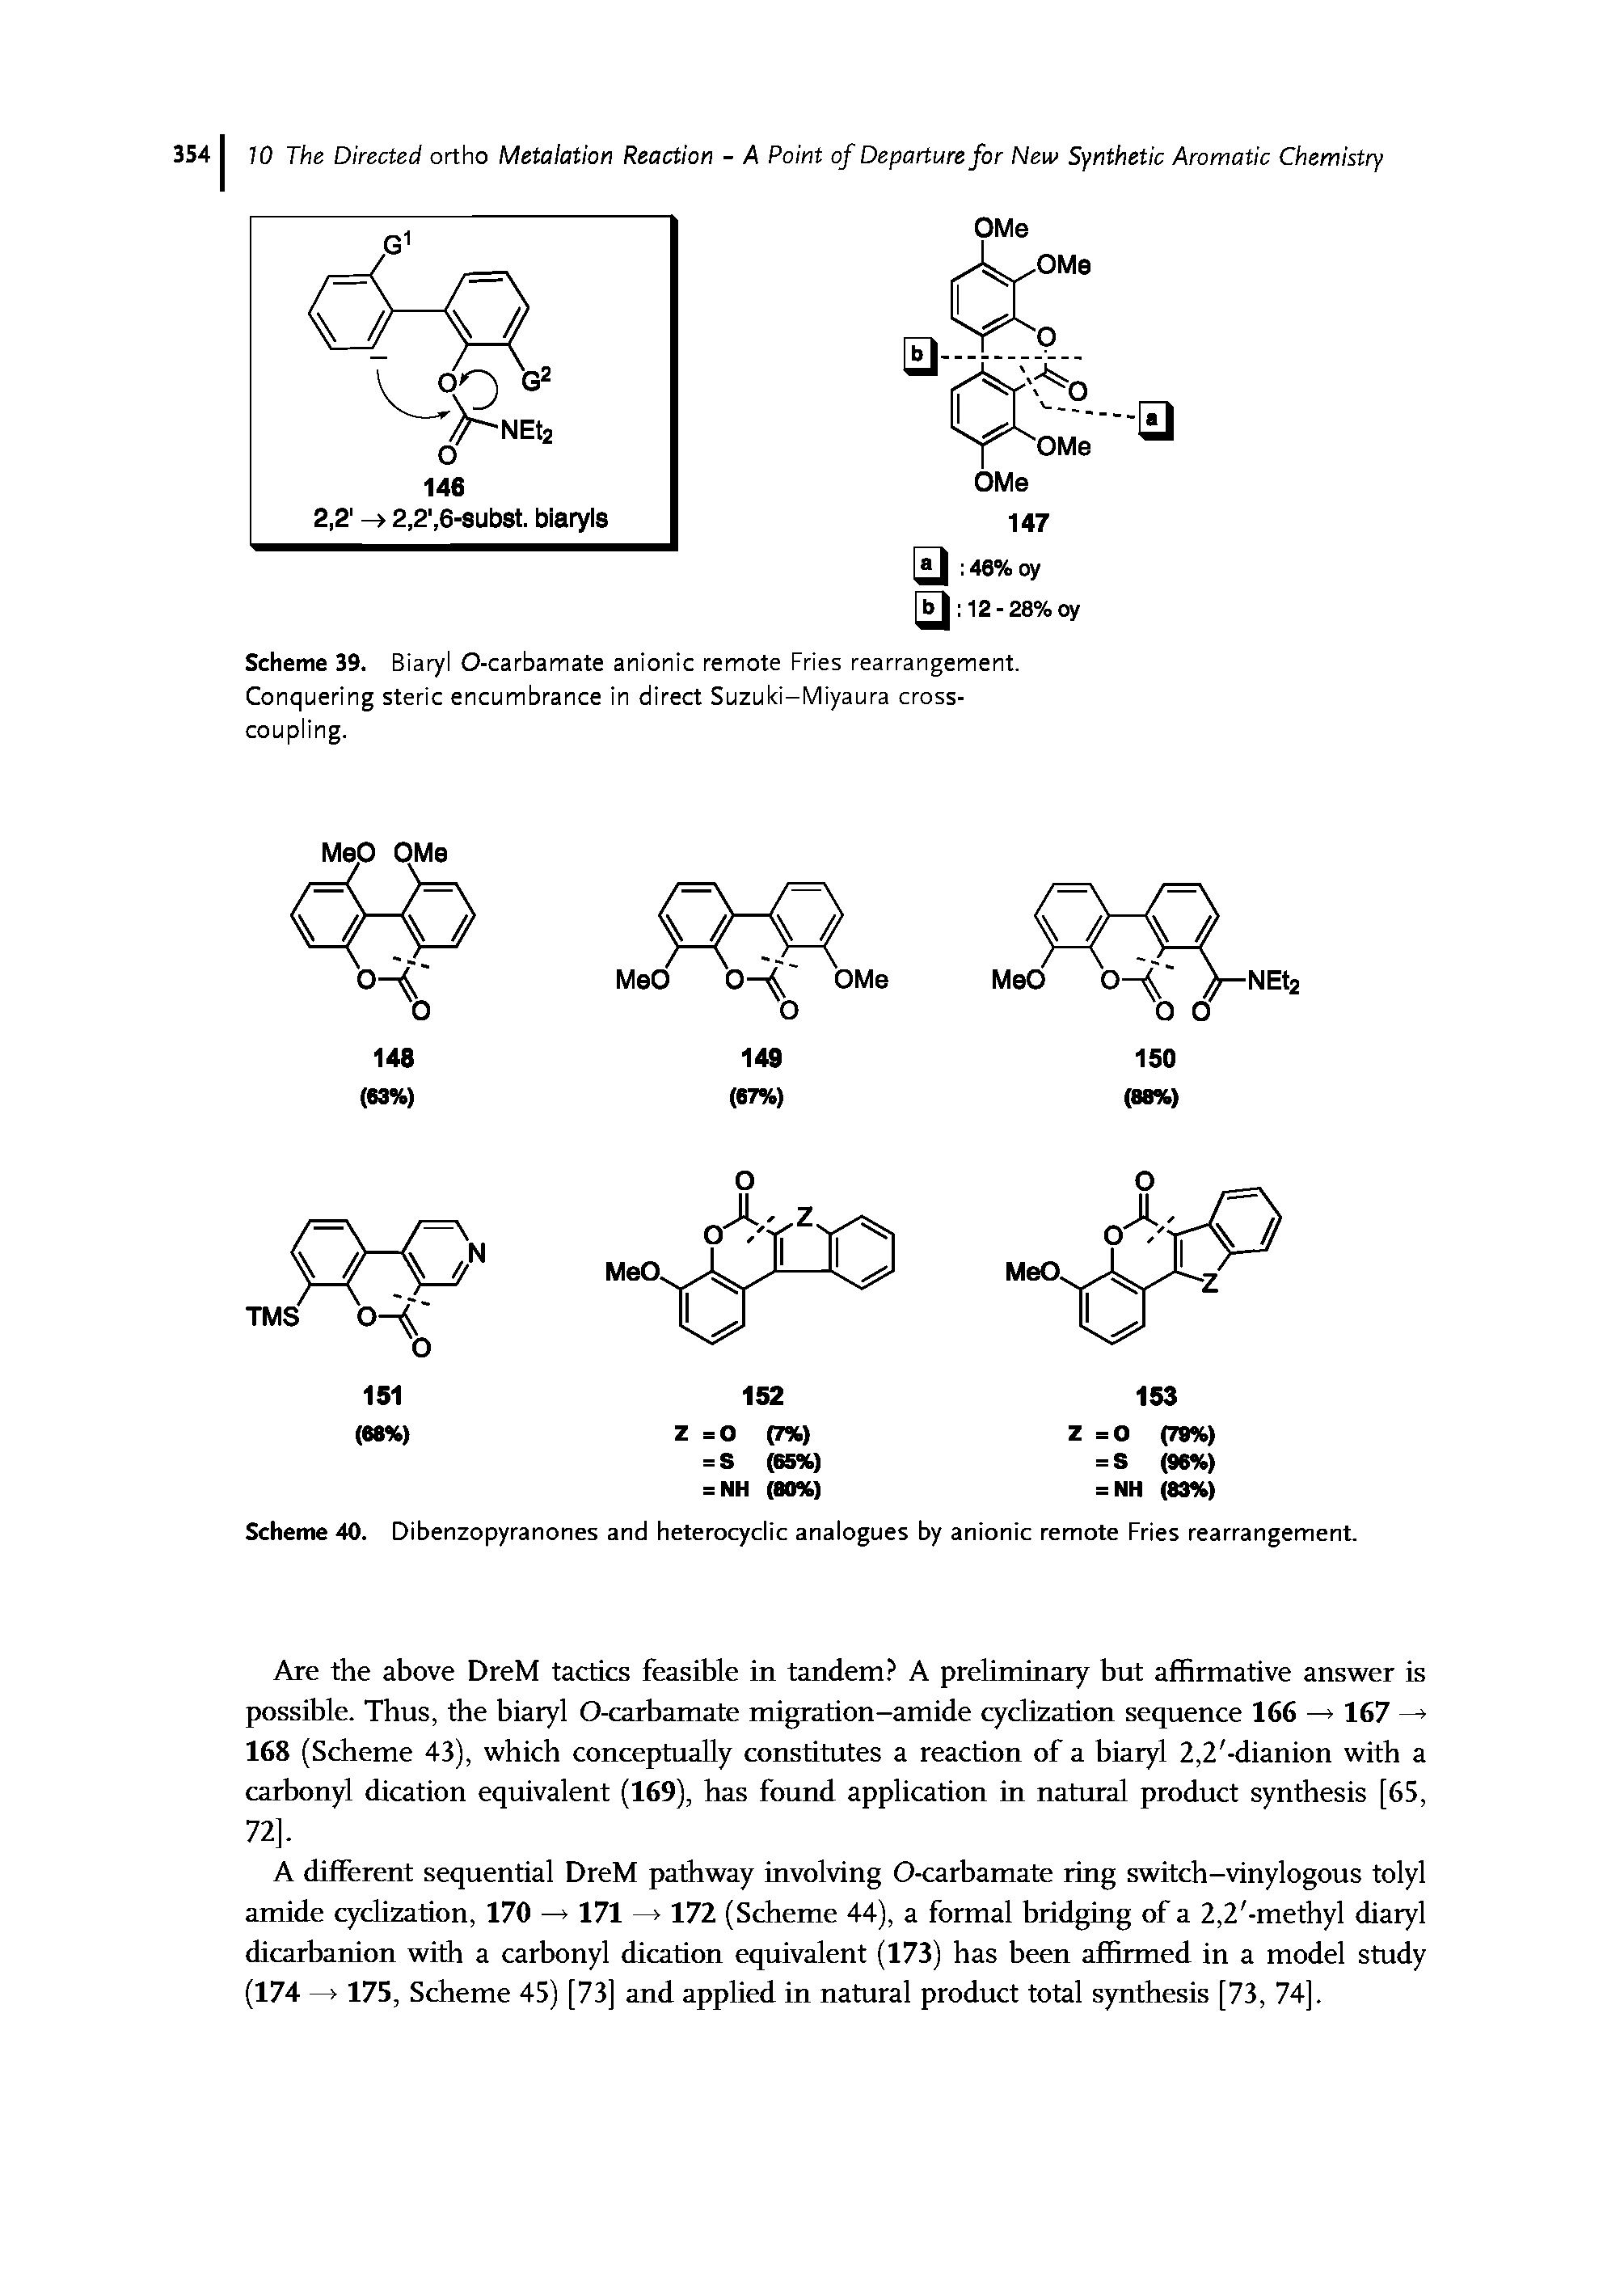 Scheme 39. Biaryl O-carbamate anionic remote Fries rearrangement. Conquering steric encumbrance in direct Suzuki-Miyaura crosscoupling.